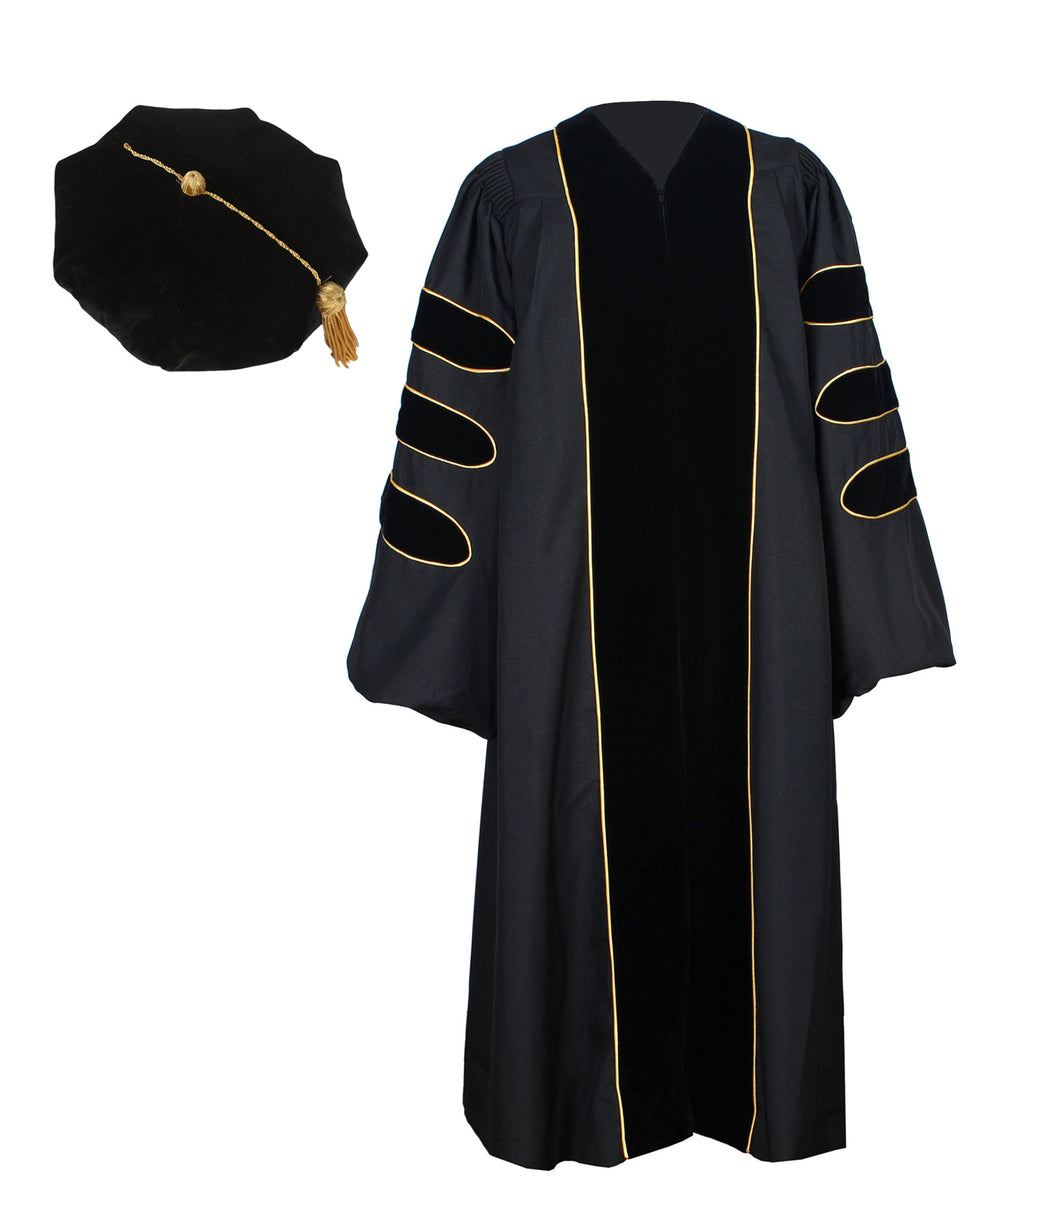 bristol phd graduation gown